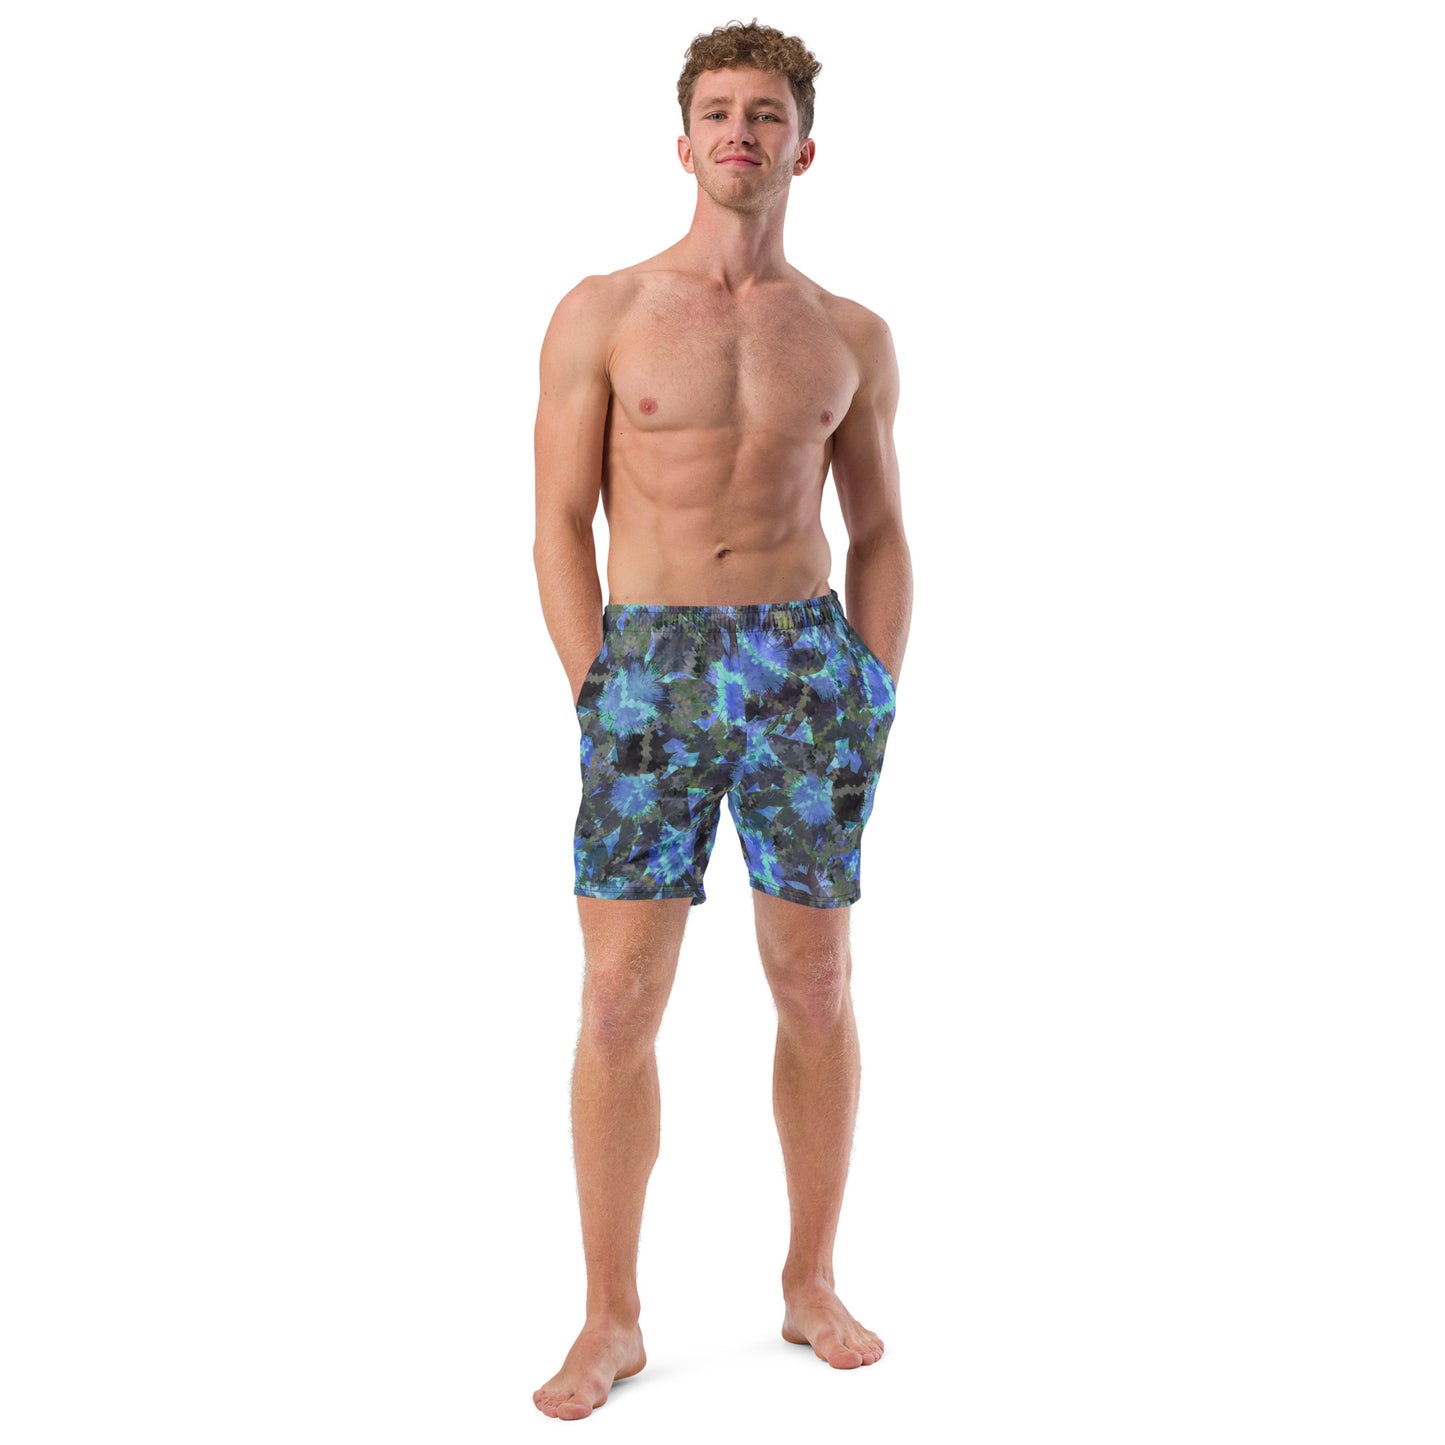 Reef Camo Men’s swim trunks